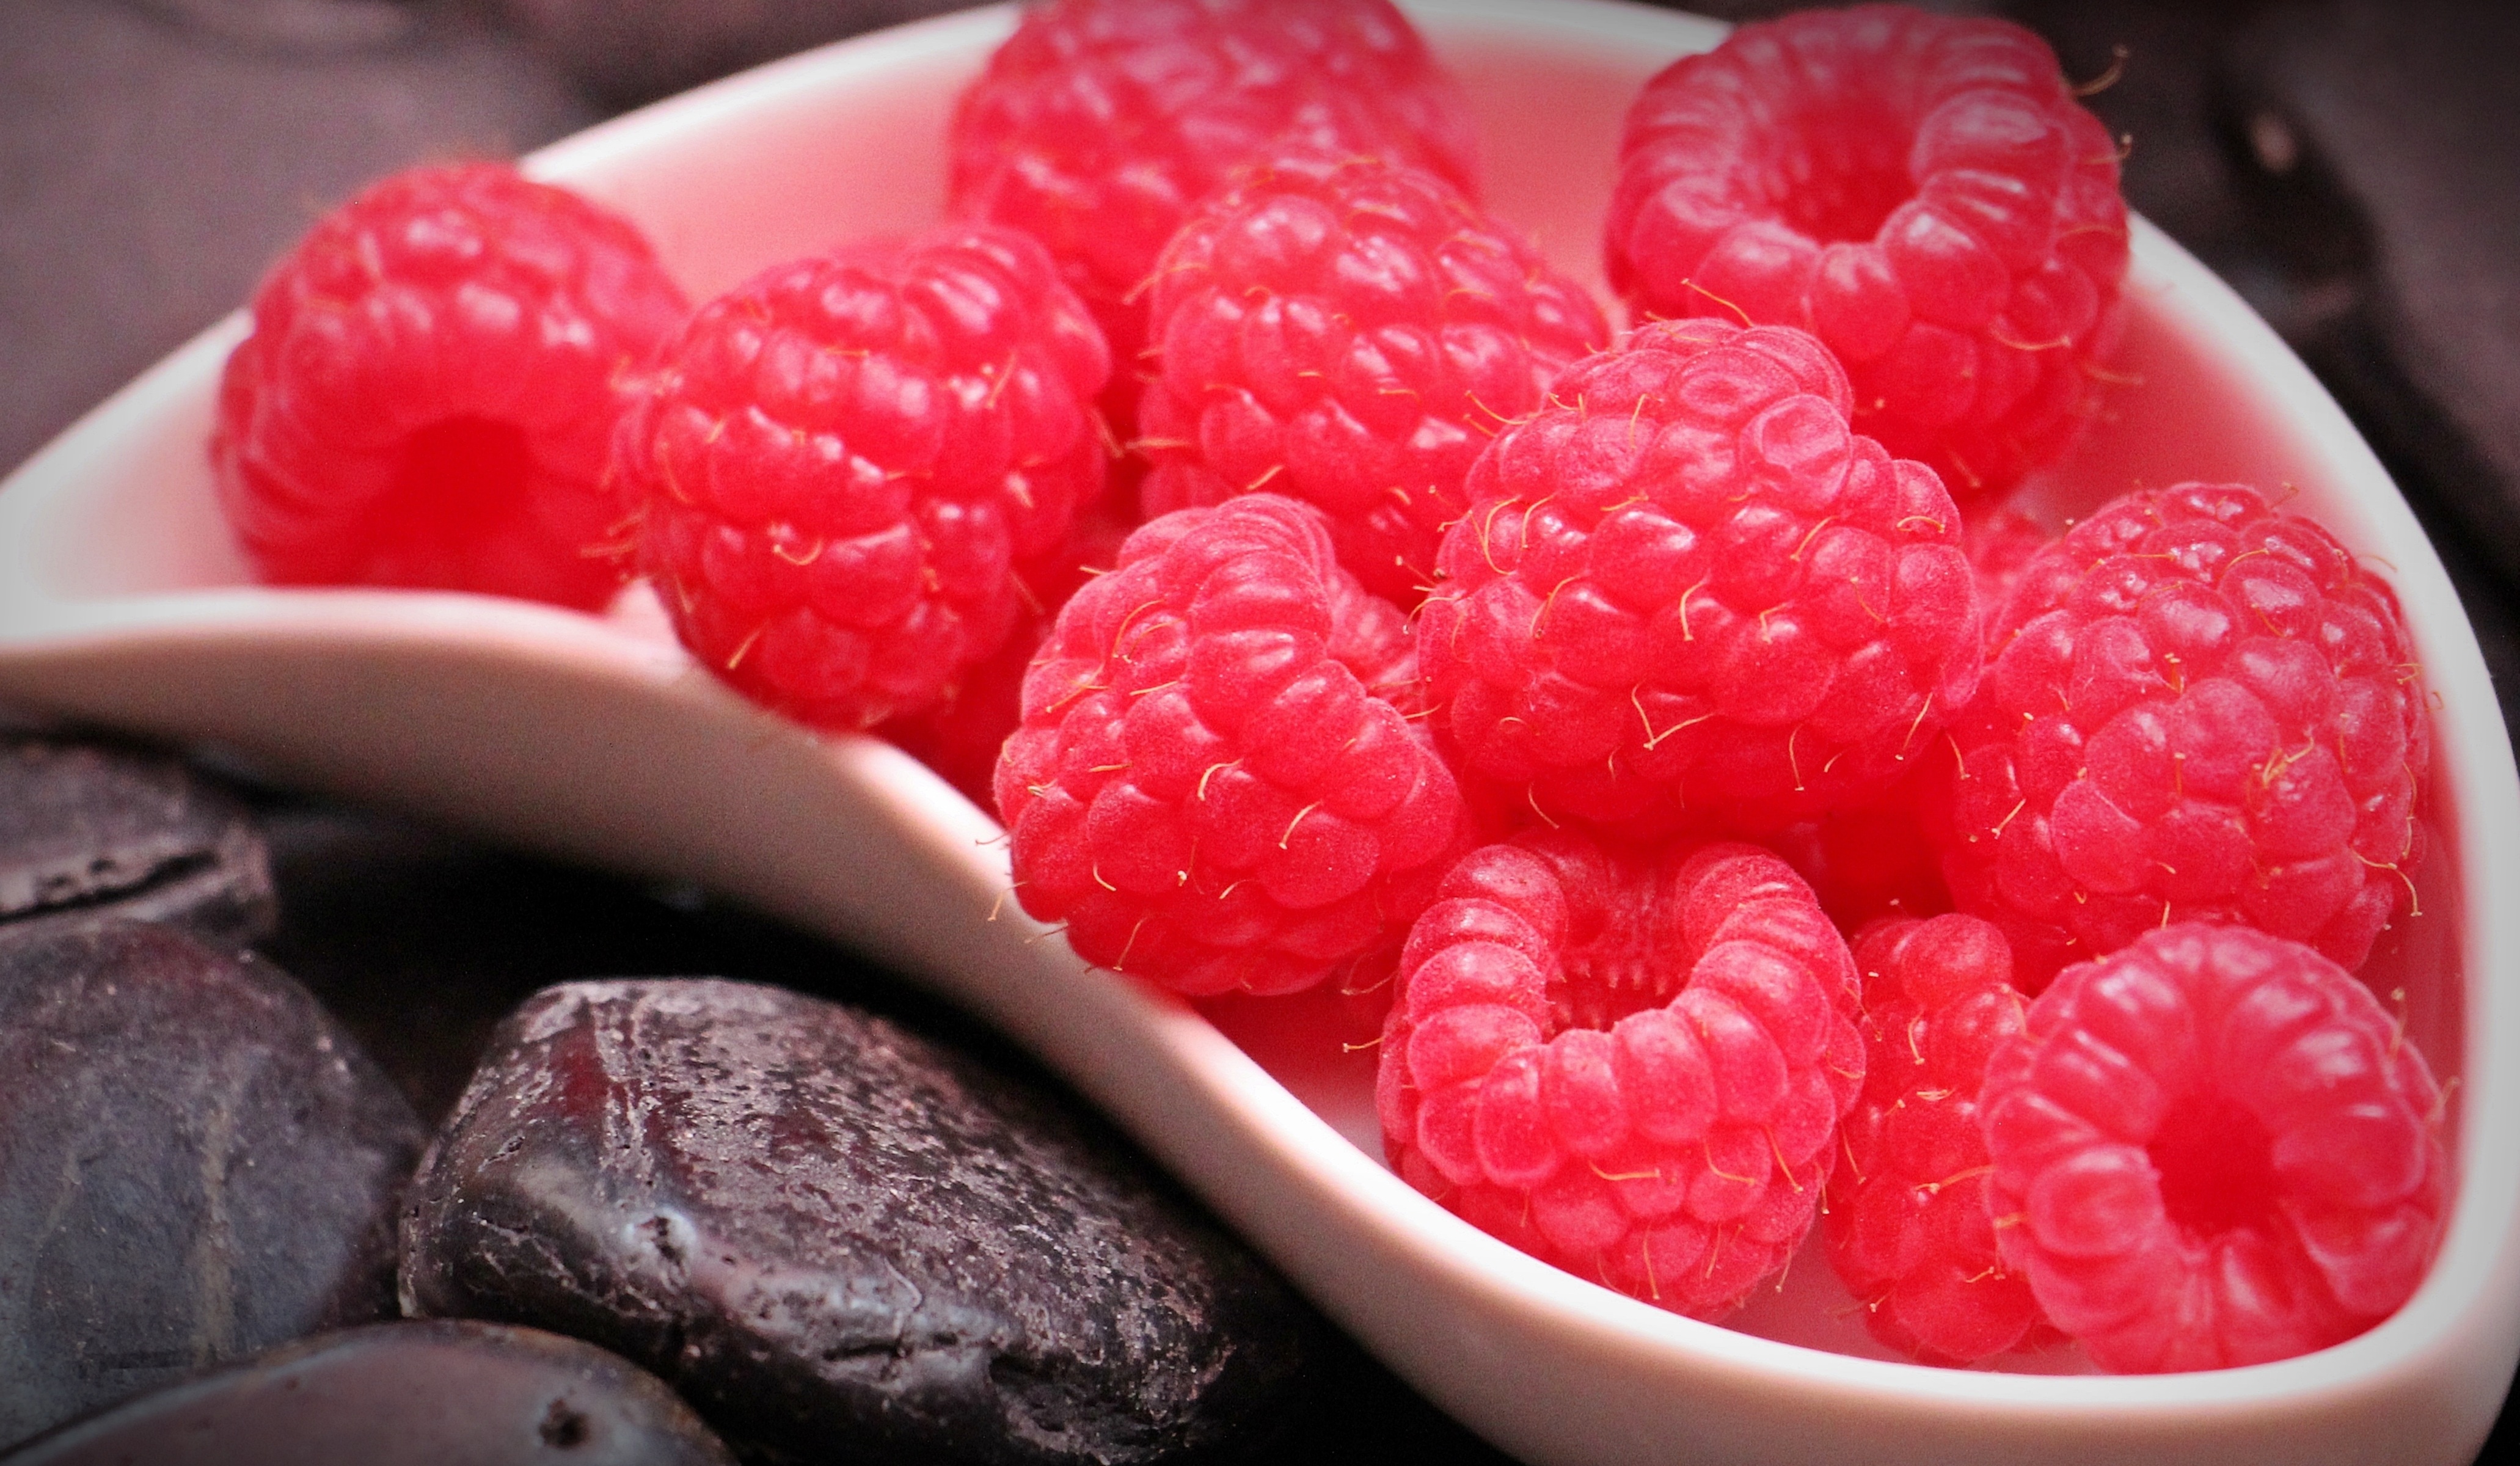 pink raspberry fruits